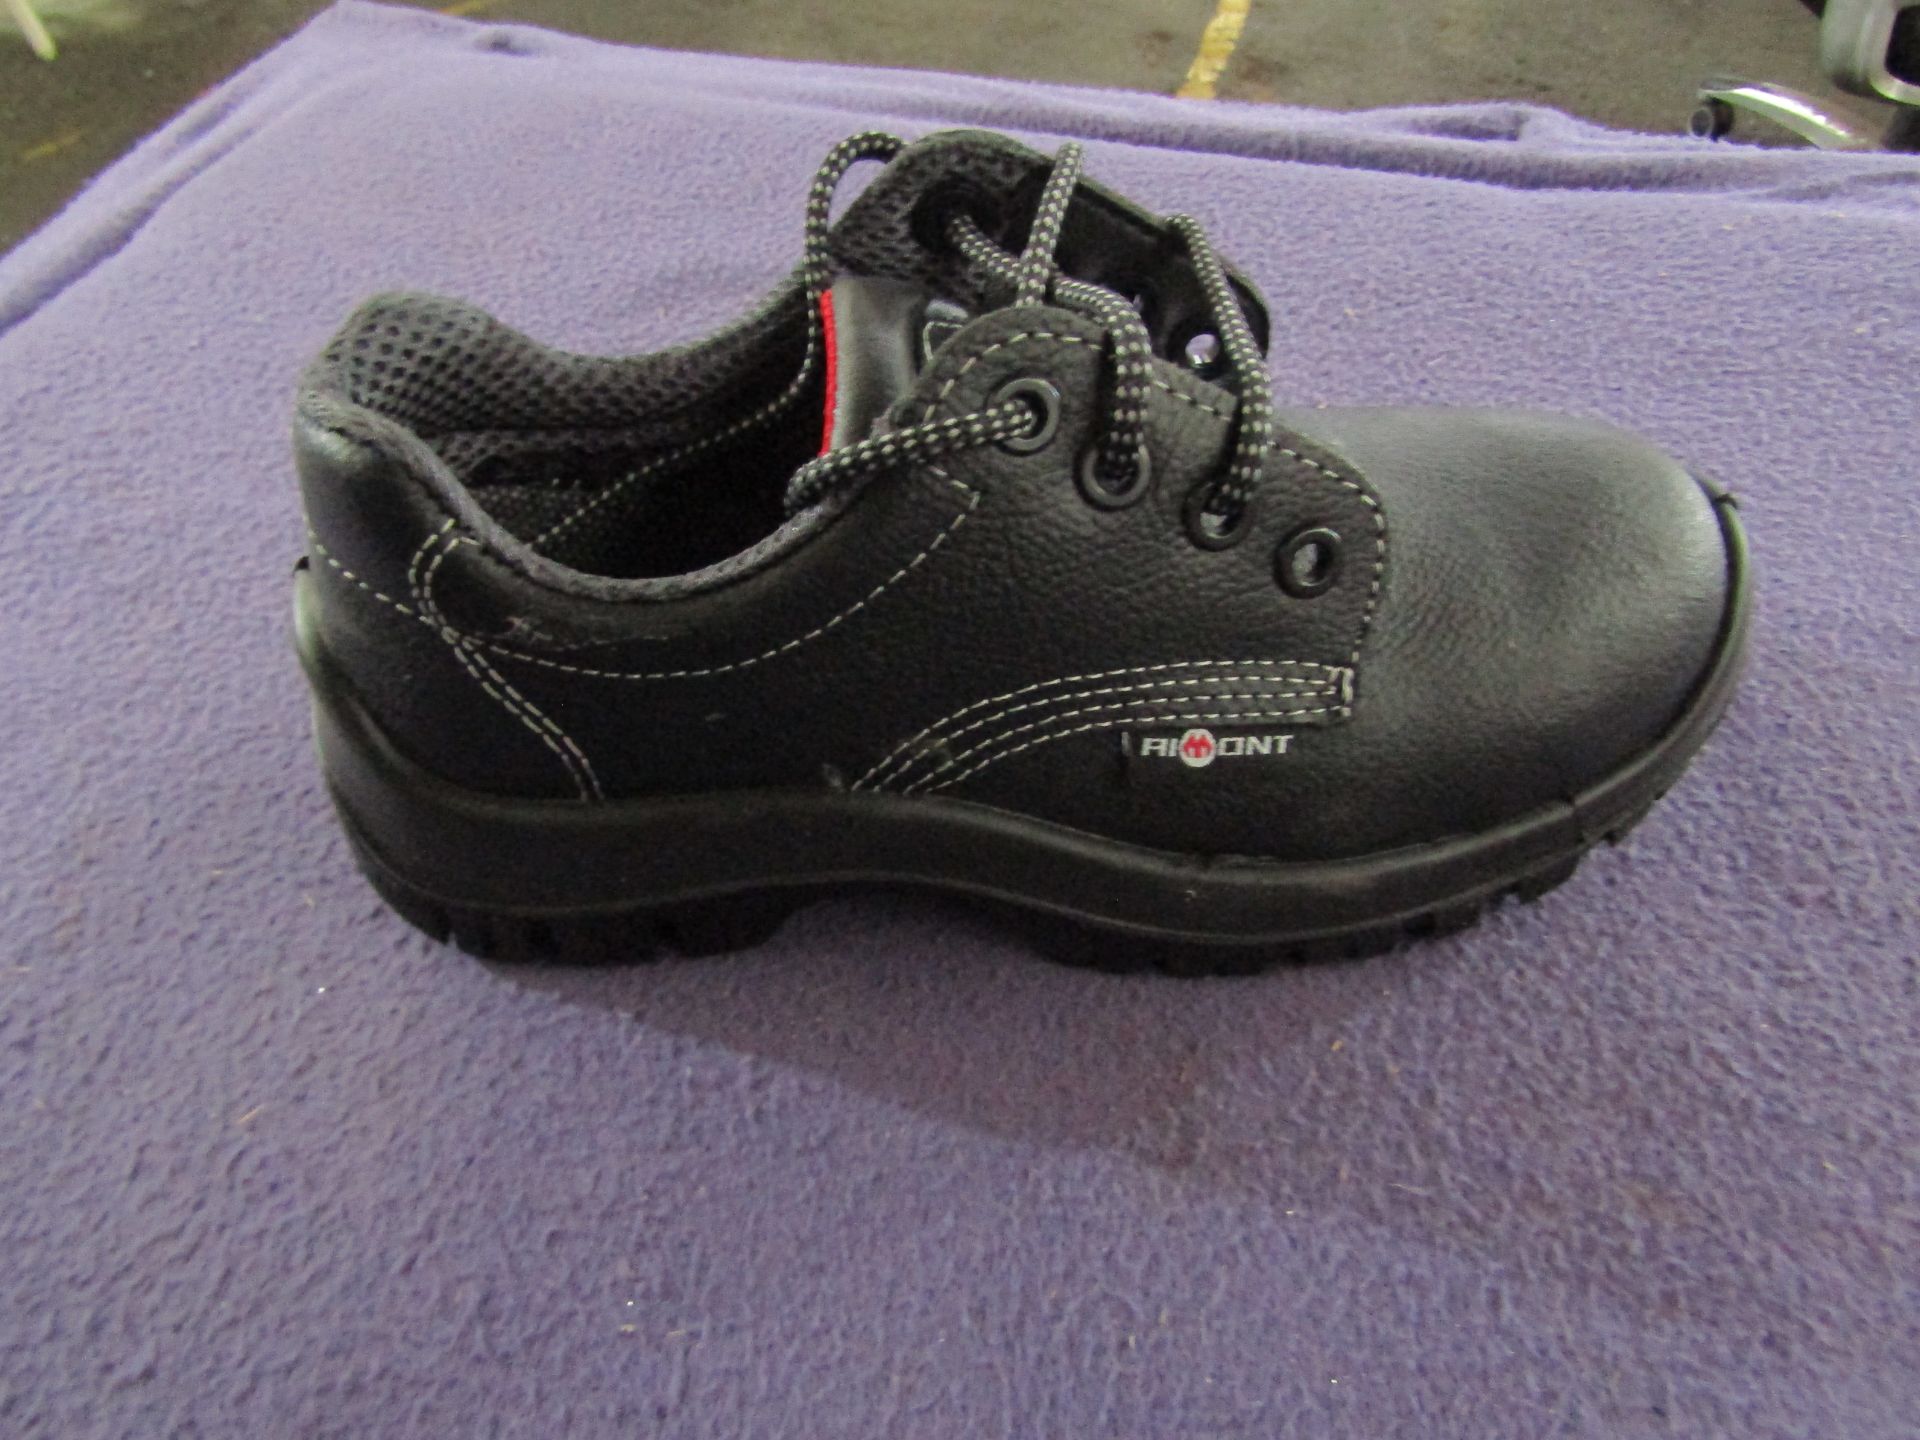 Aimont - Black Steel Toe Cap Shoes - Size 4 - Unused & Boxed.